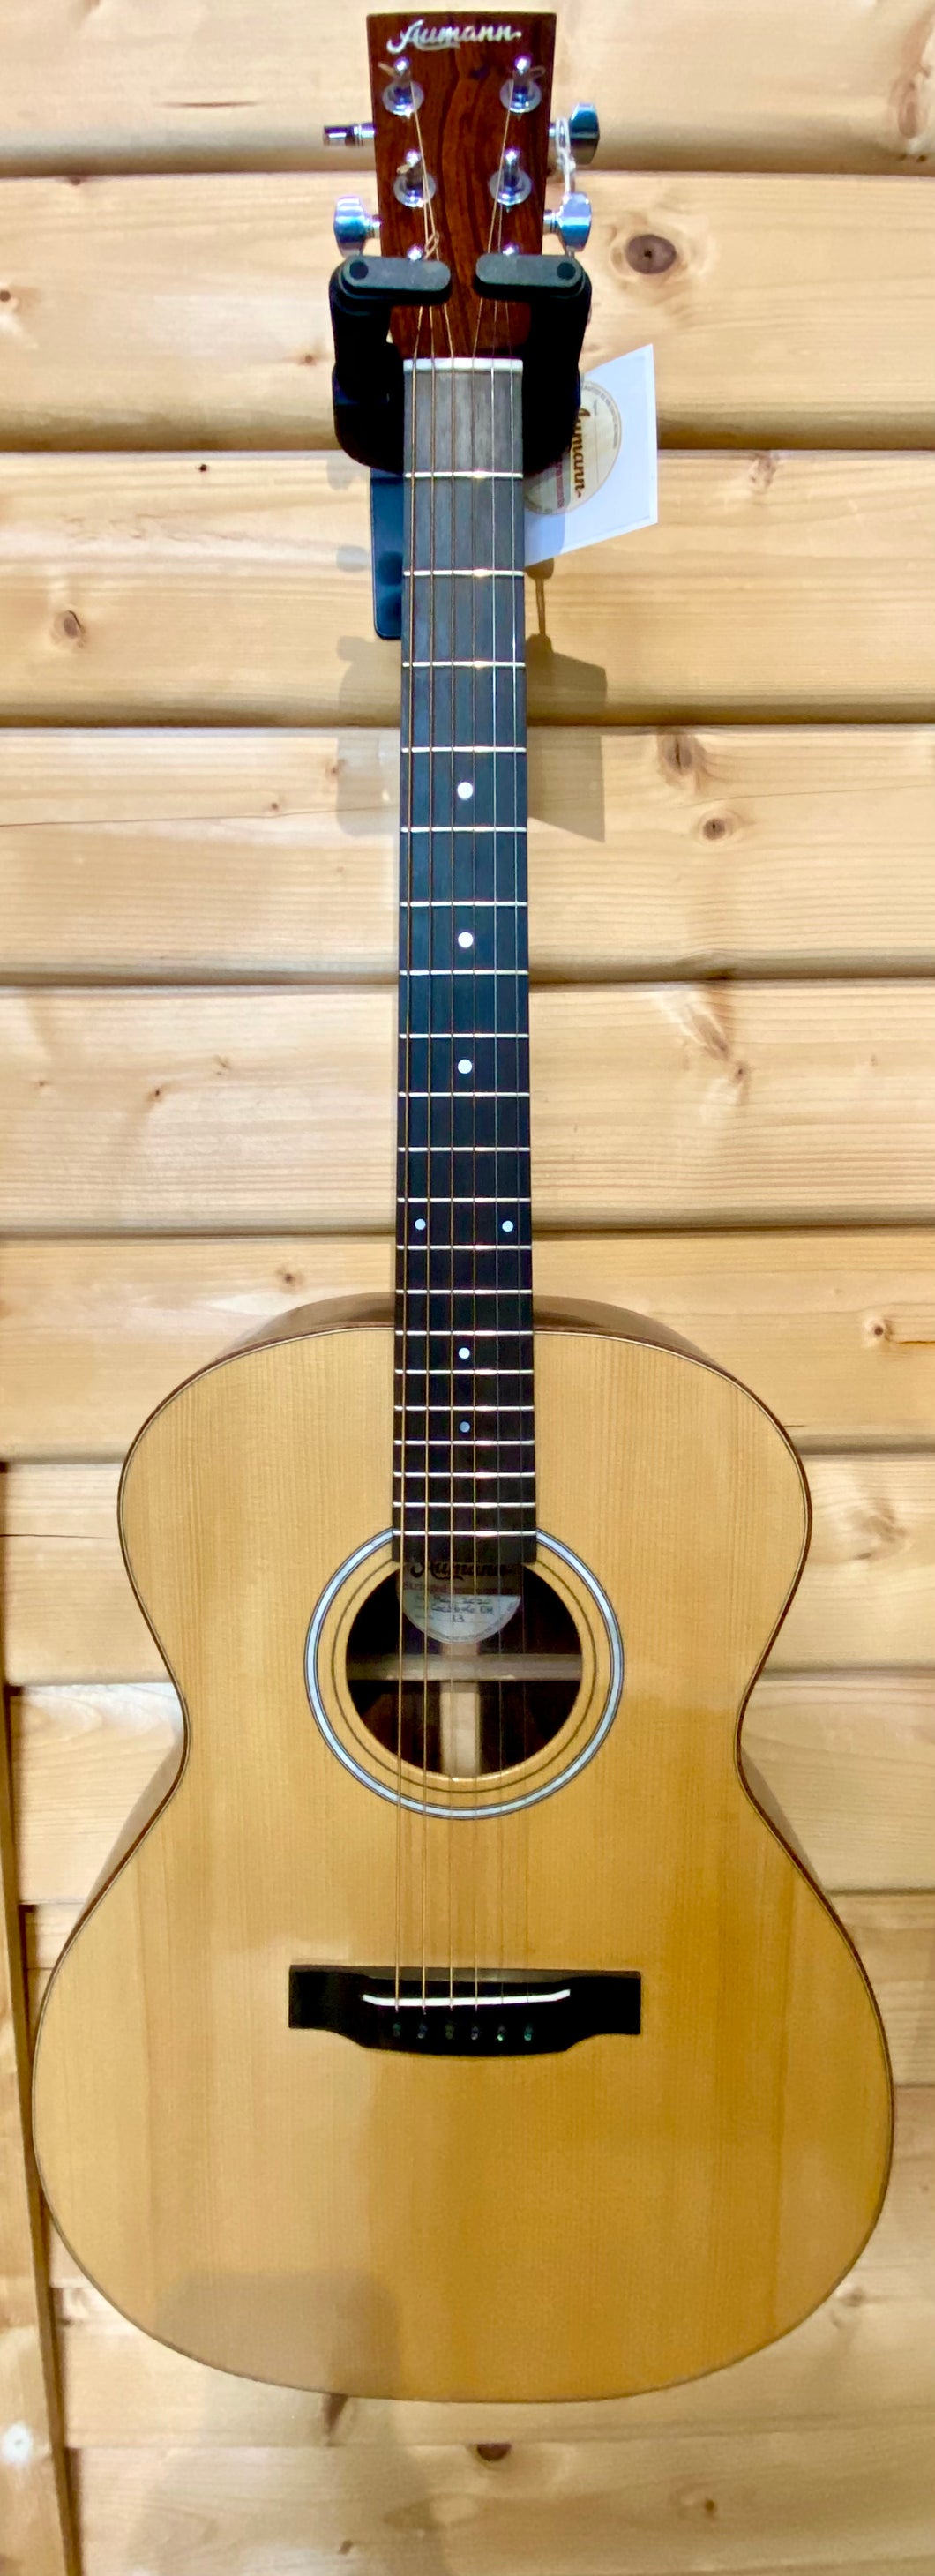 David Aumann 000-28 Style Guitar